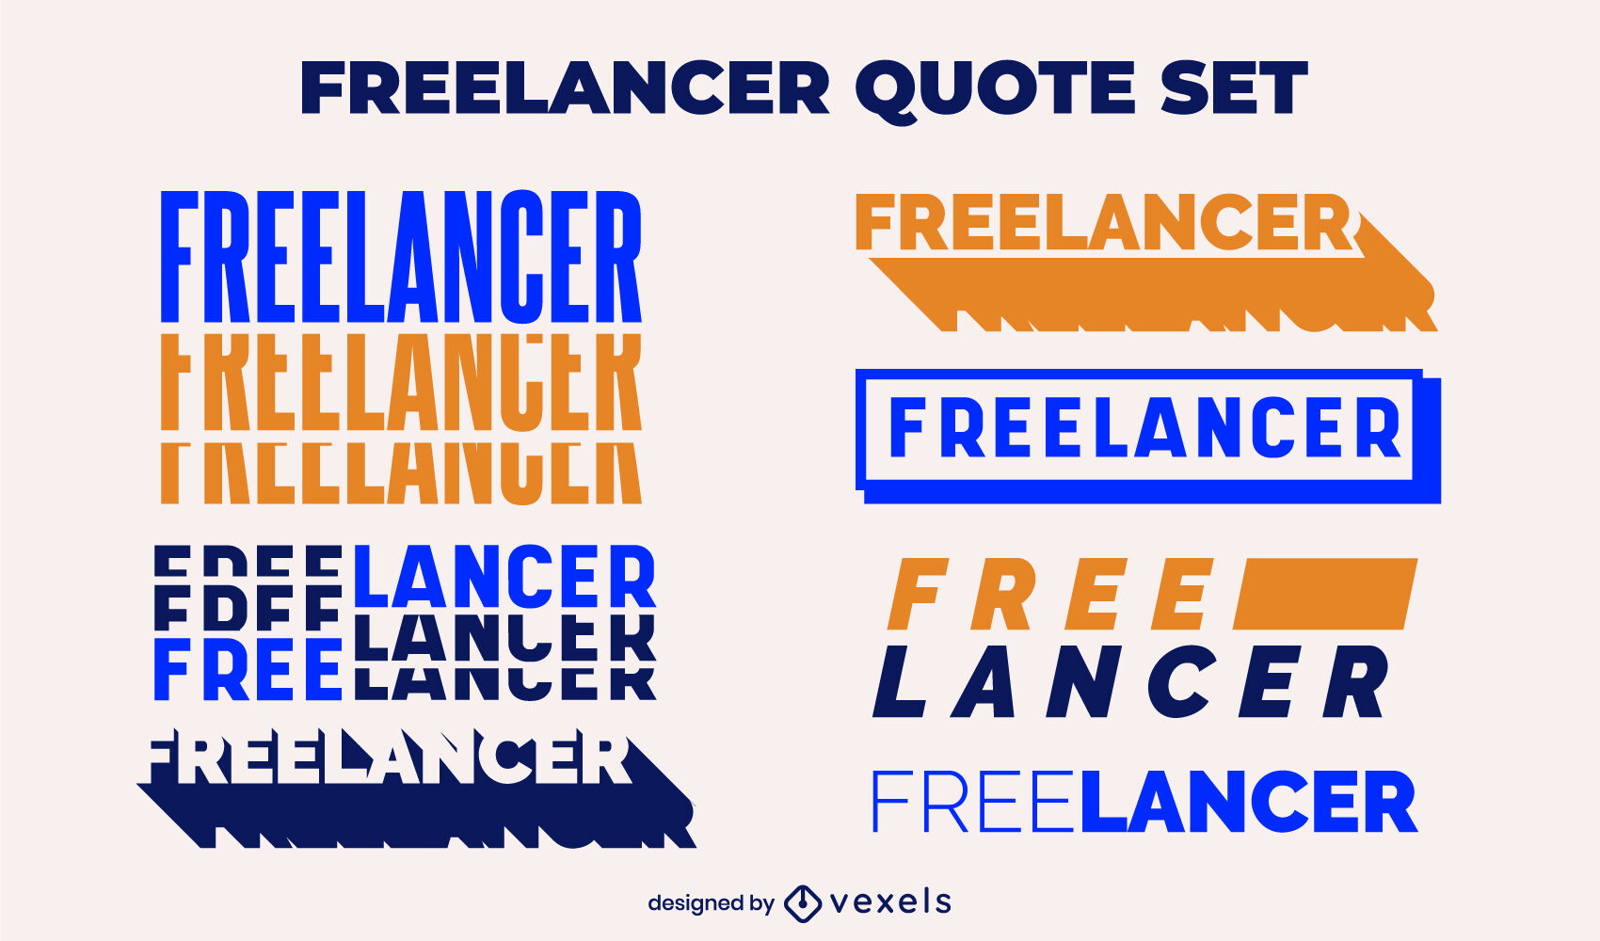 Freelancer quote set